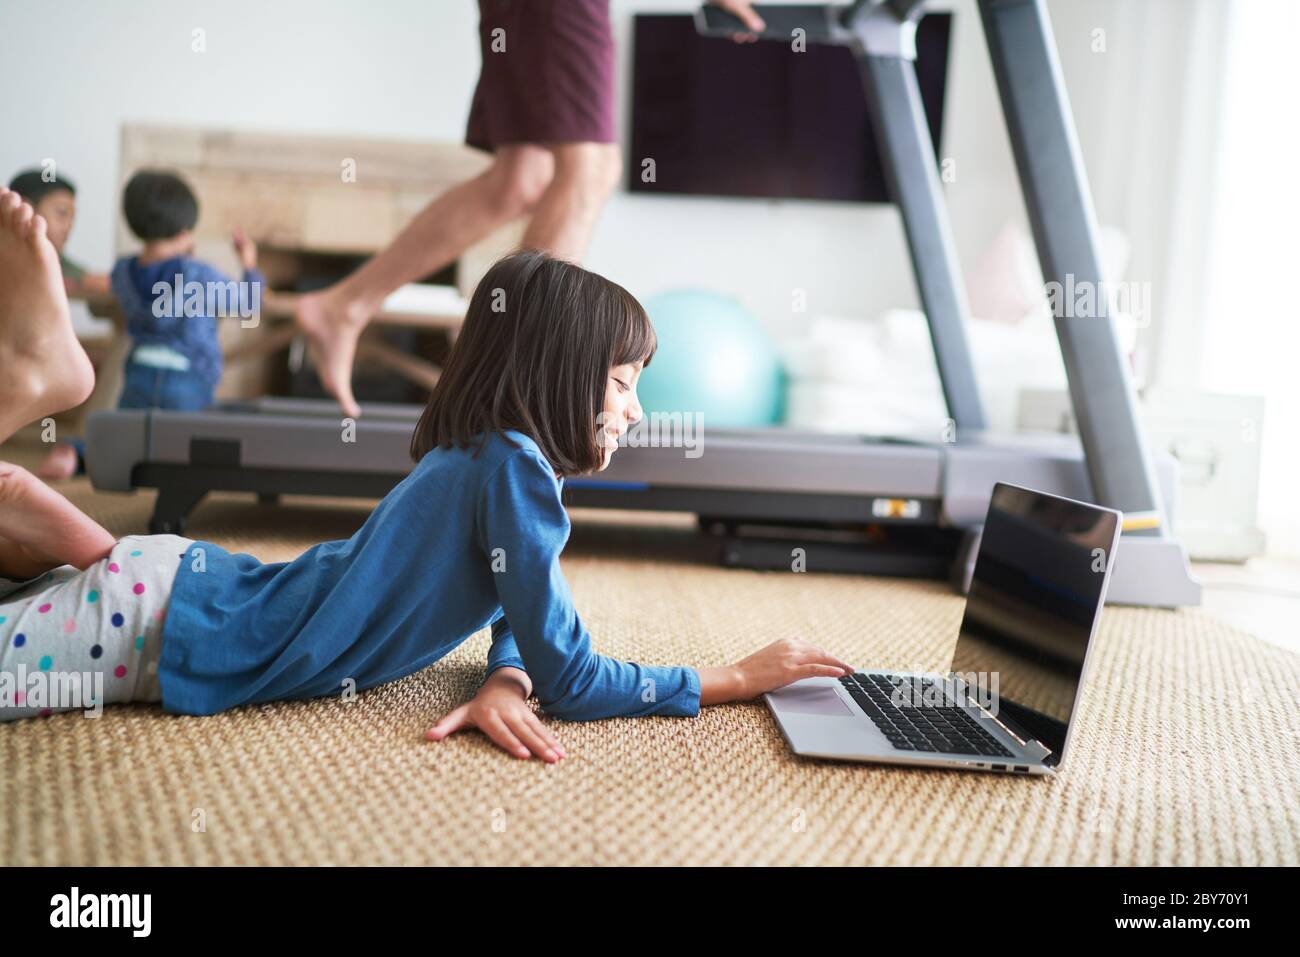 Girl using laptop on floor next to father on treadmill Stock Photo